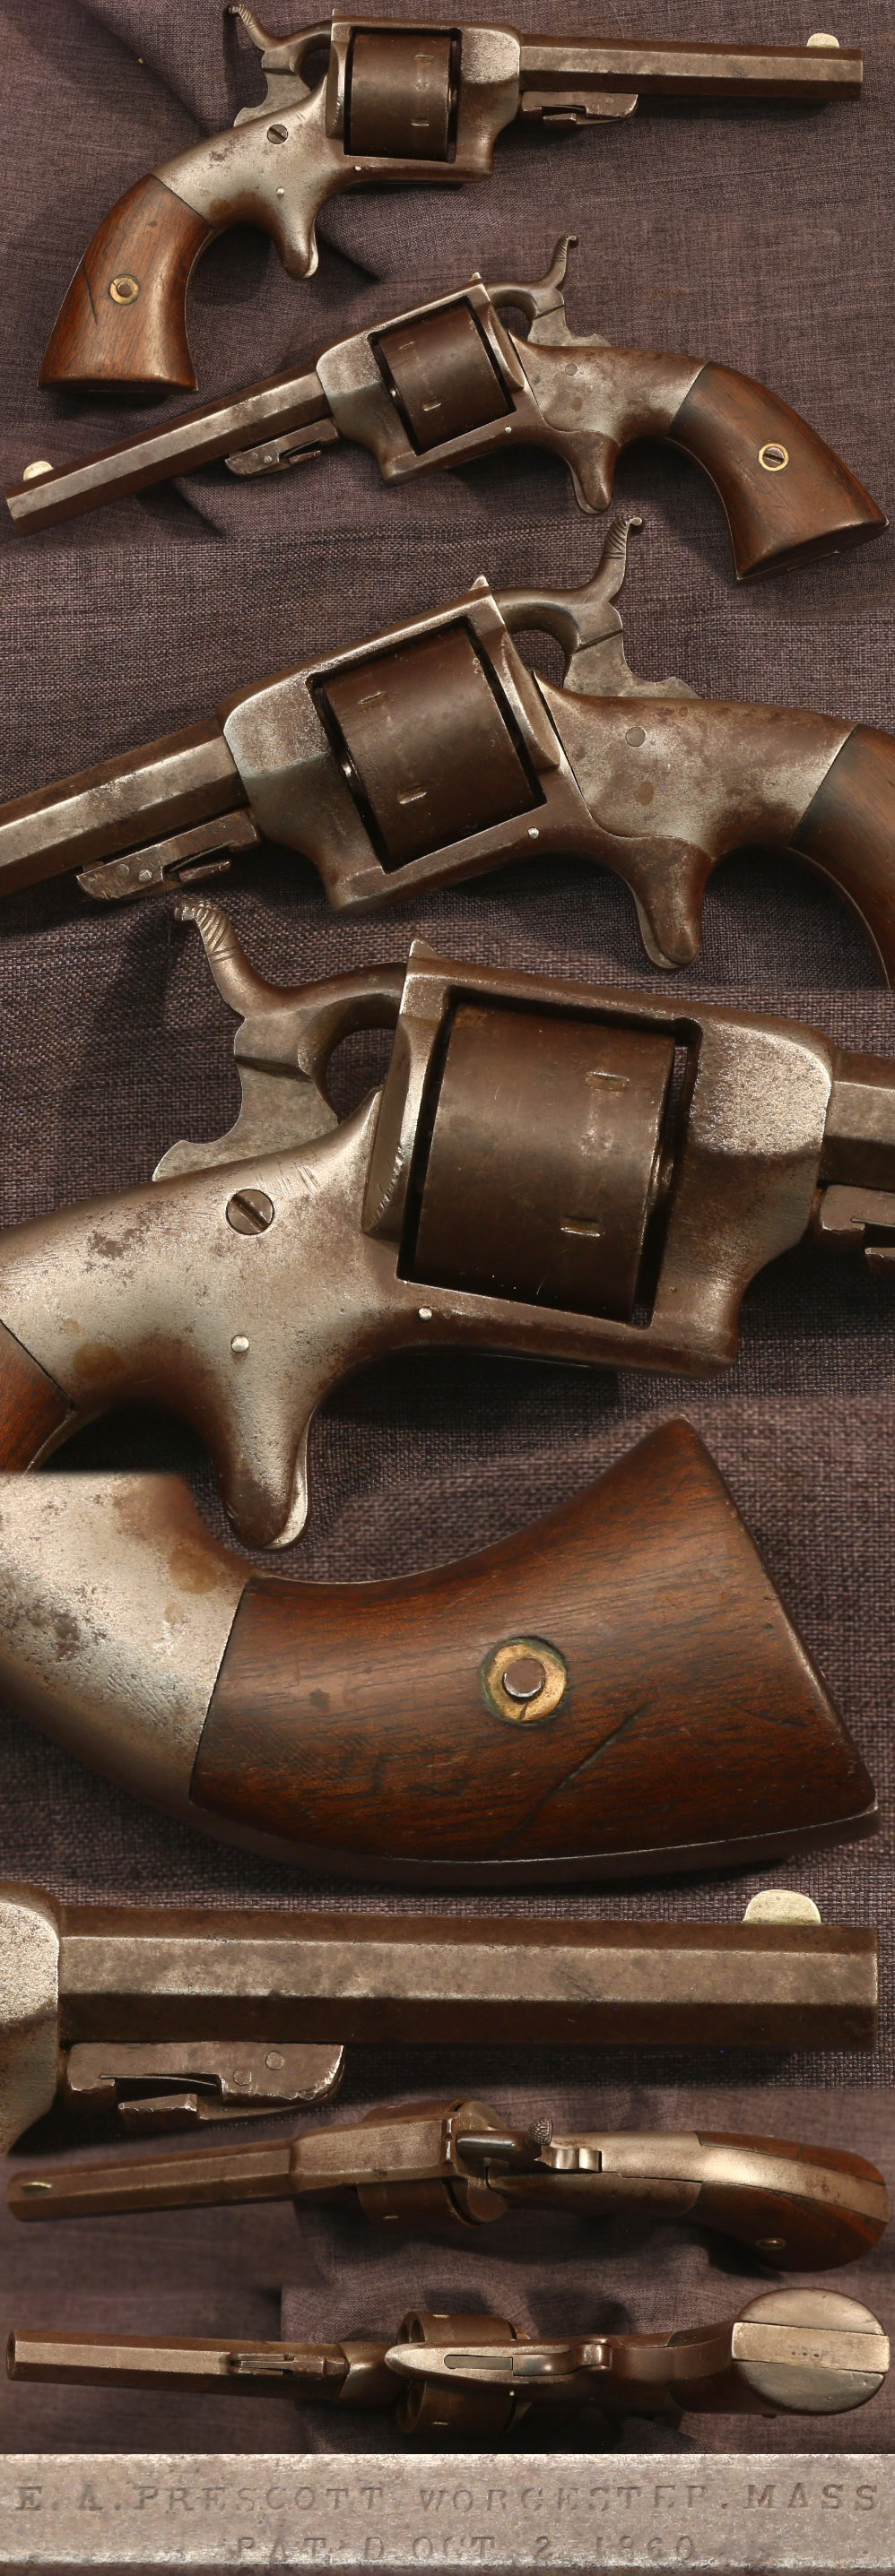 32-revolver